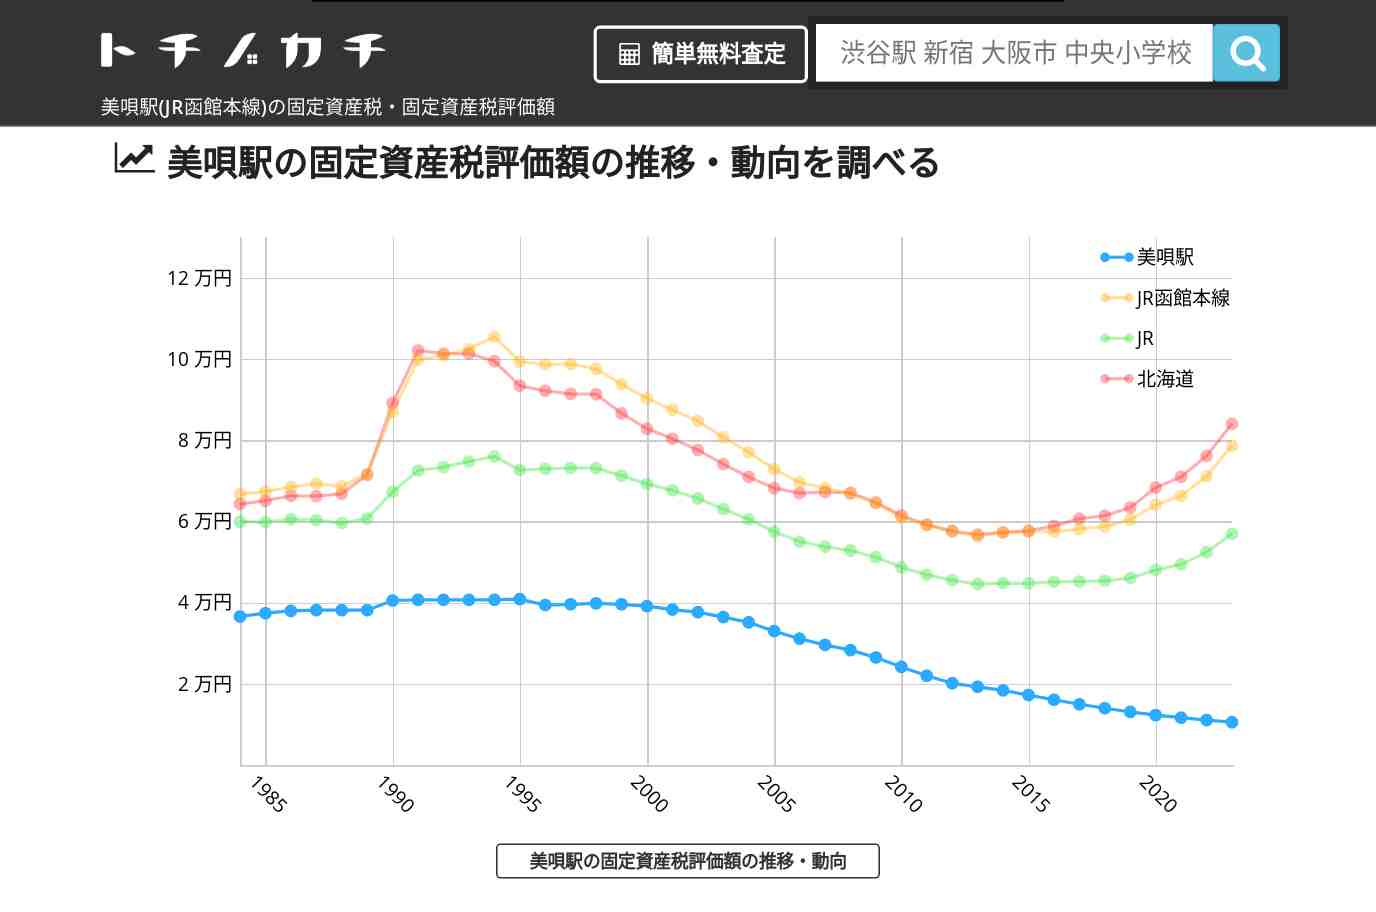 美唄駅(JR函館本線)の固定資産税・固定資産税評価額 | トチノカチ